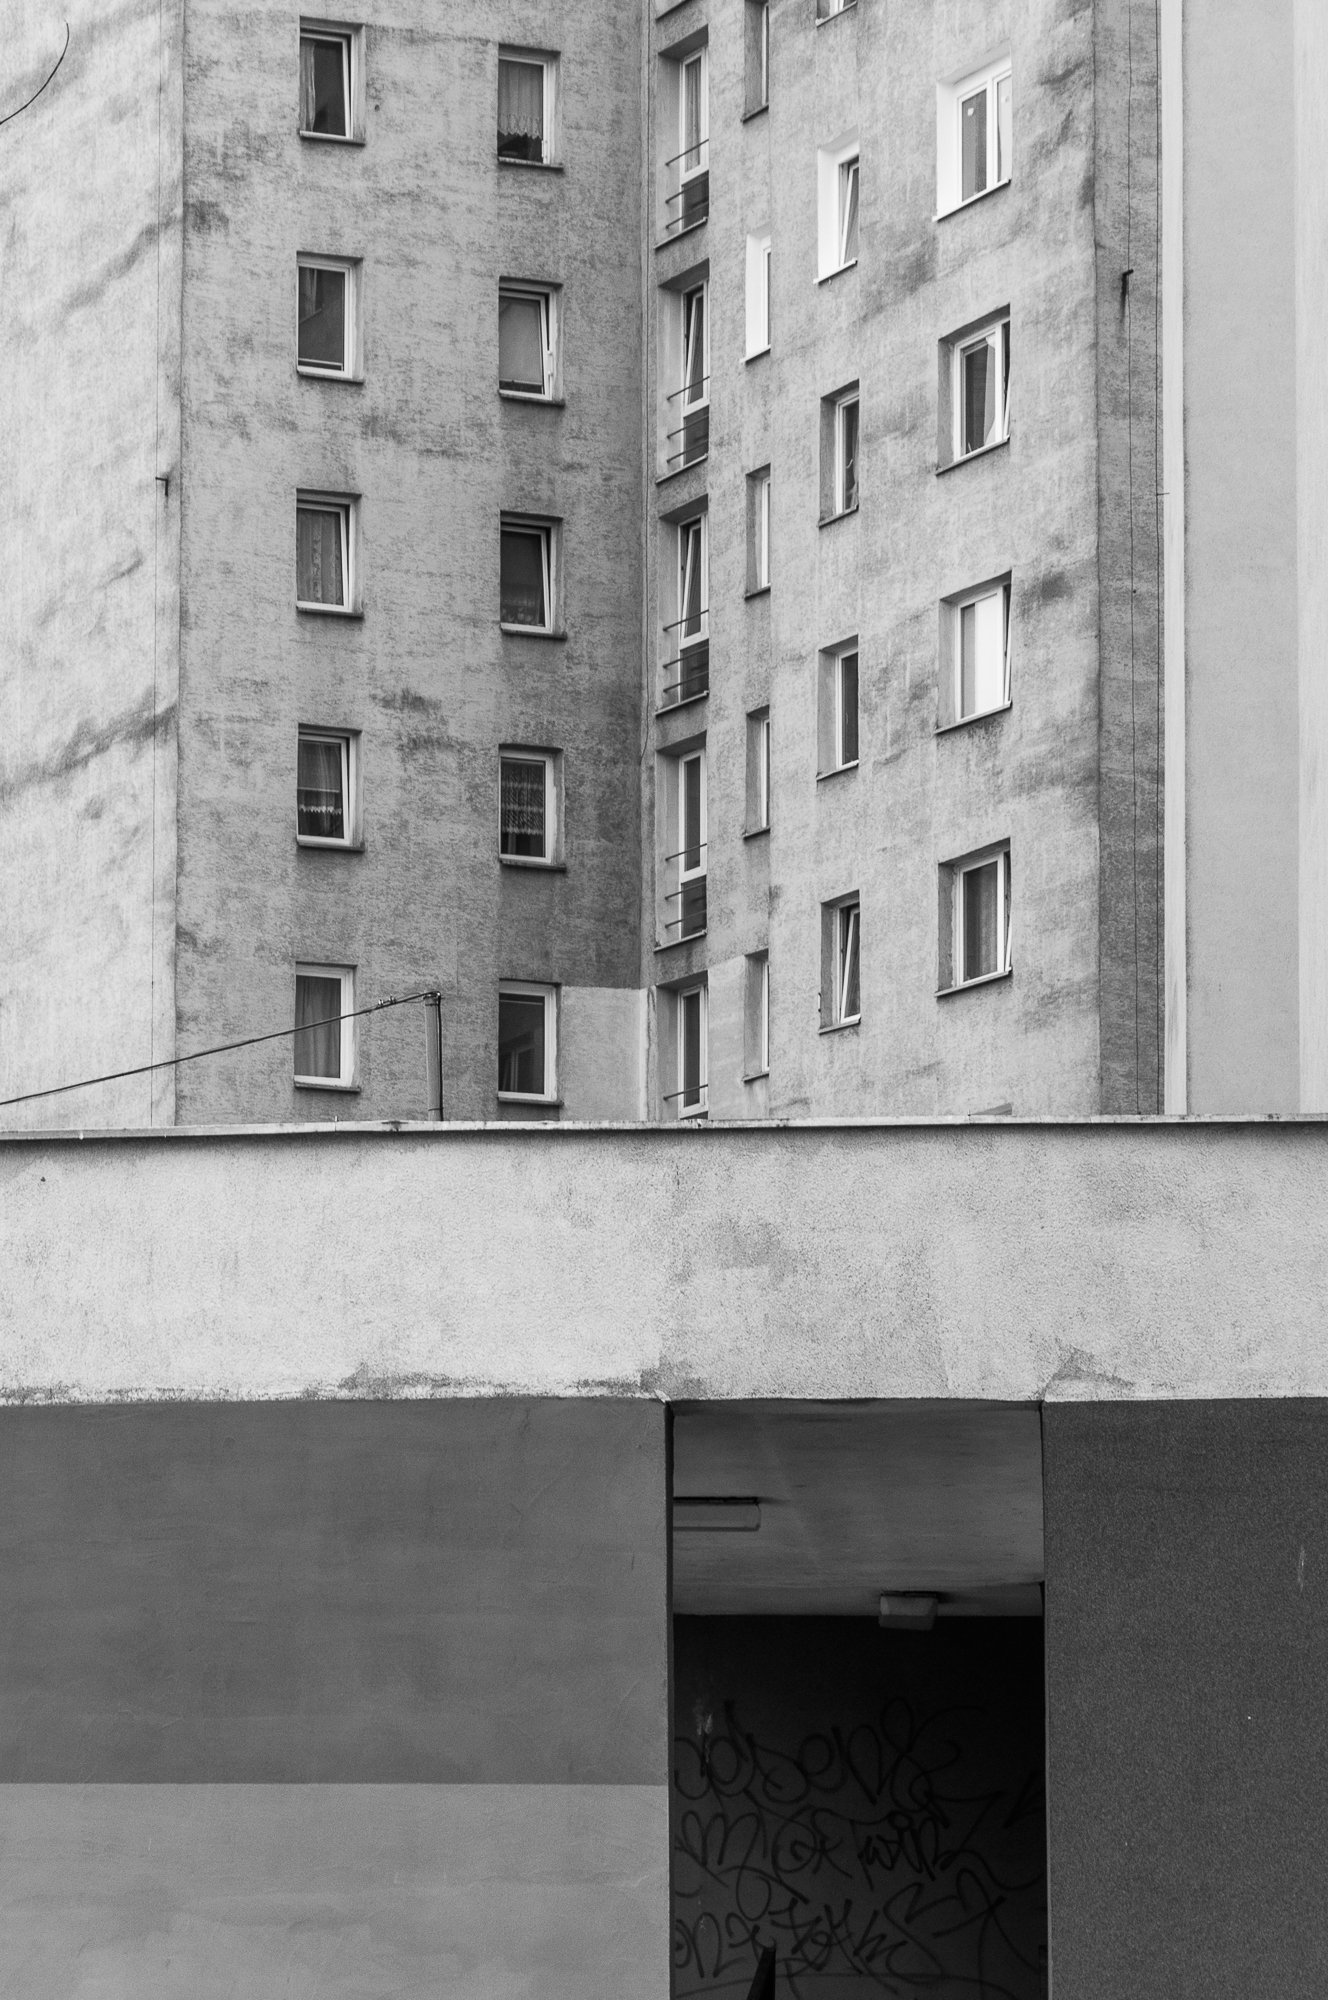 Adam Mazek Photography Warsaw 2017. Minimalism. Geometry. 2 in 1. Blocks of flats. Perspective.